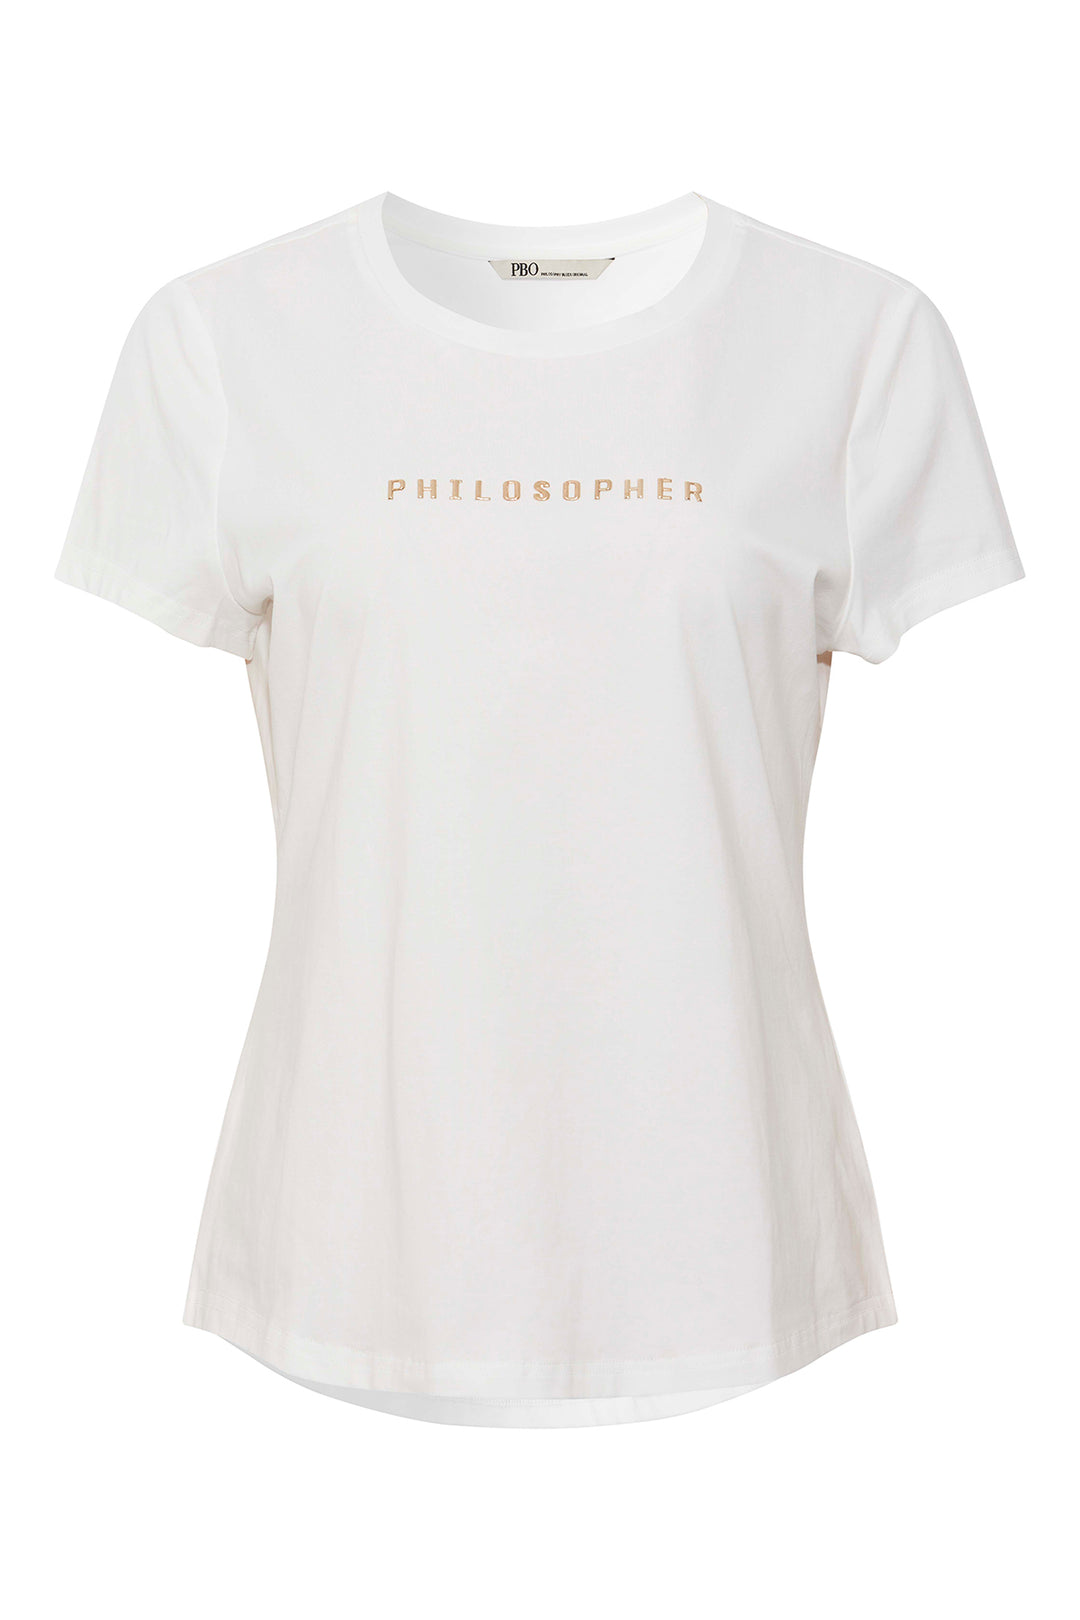 PBO Philosopher T-shirt T-SHIRTS 01 White